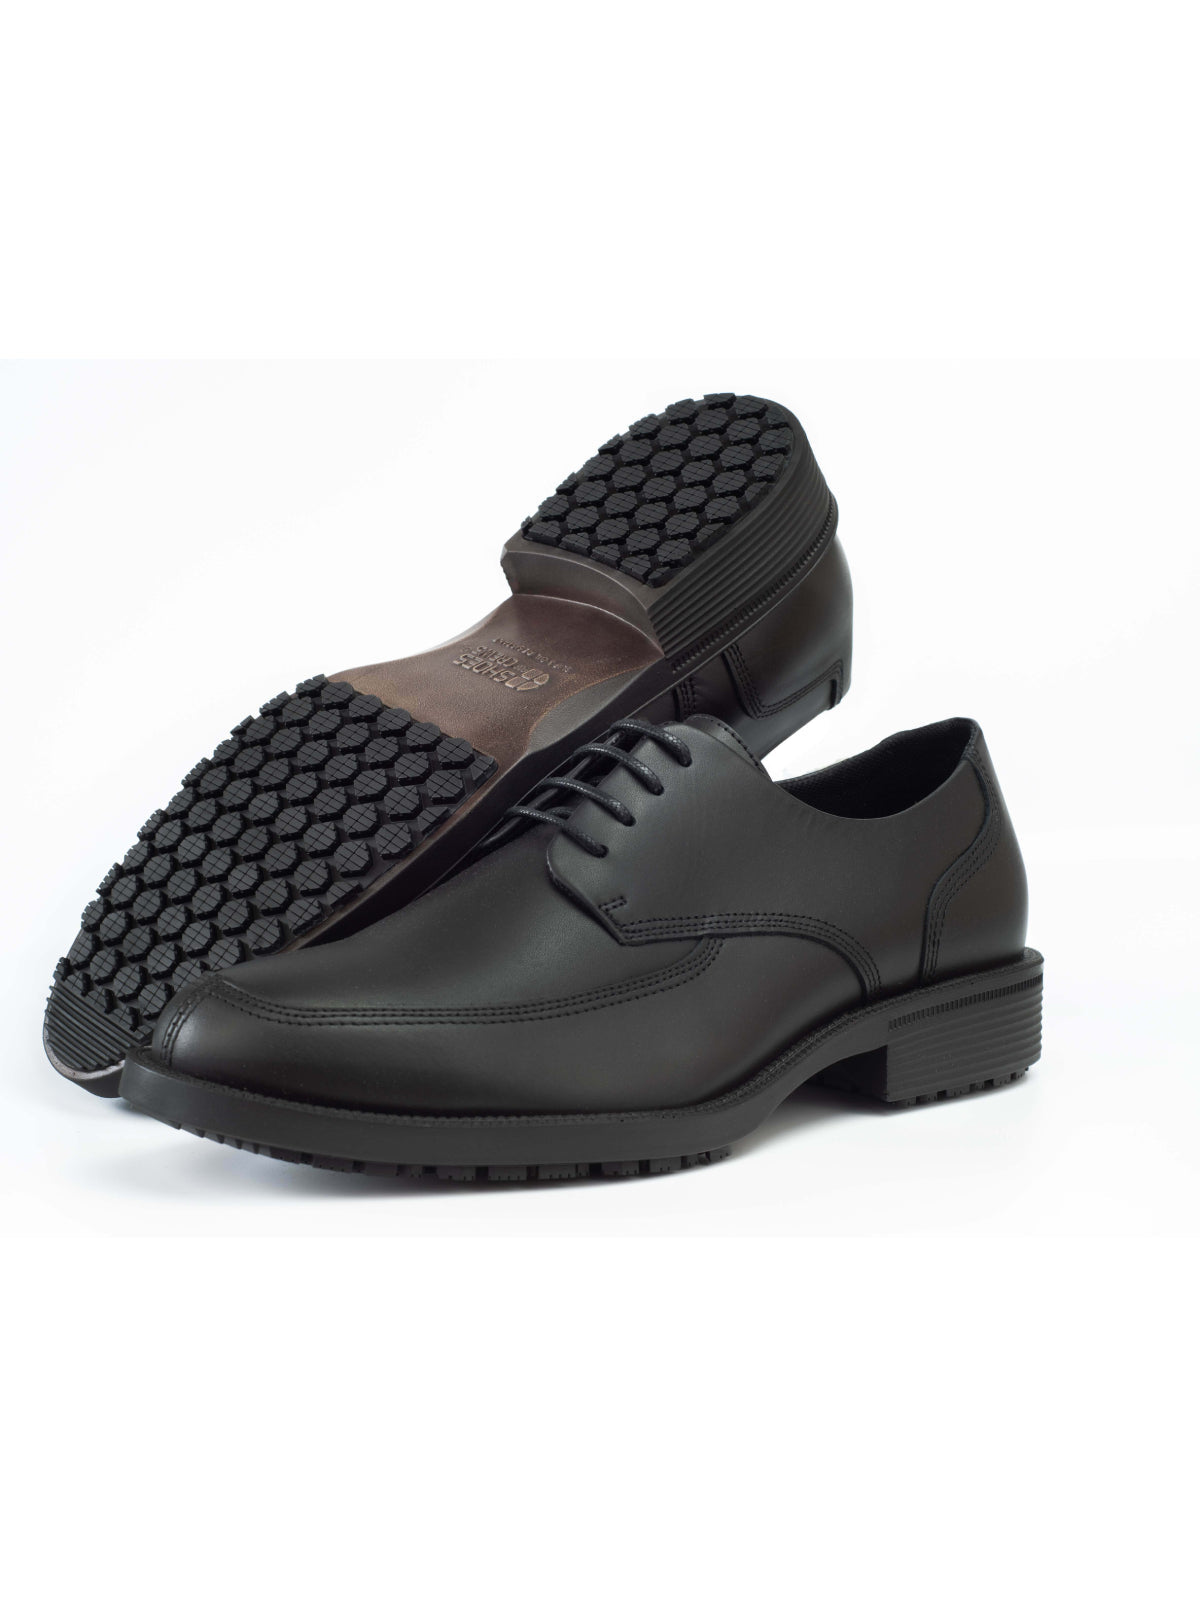 Men's Work Shoe Aristocrat IV by Shoes For Crews -  ChefsCotton